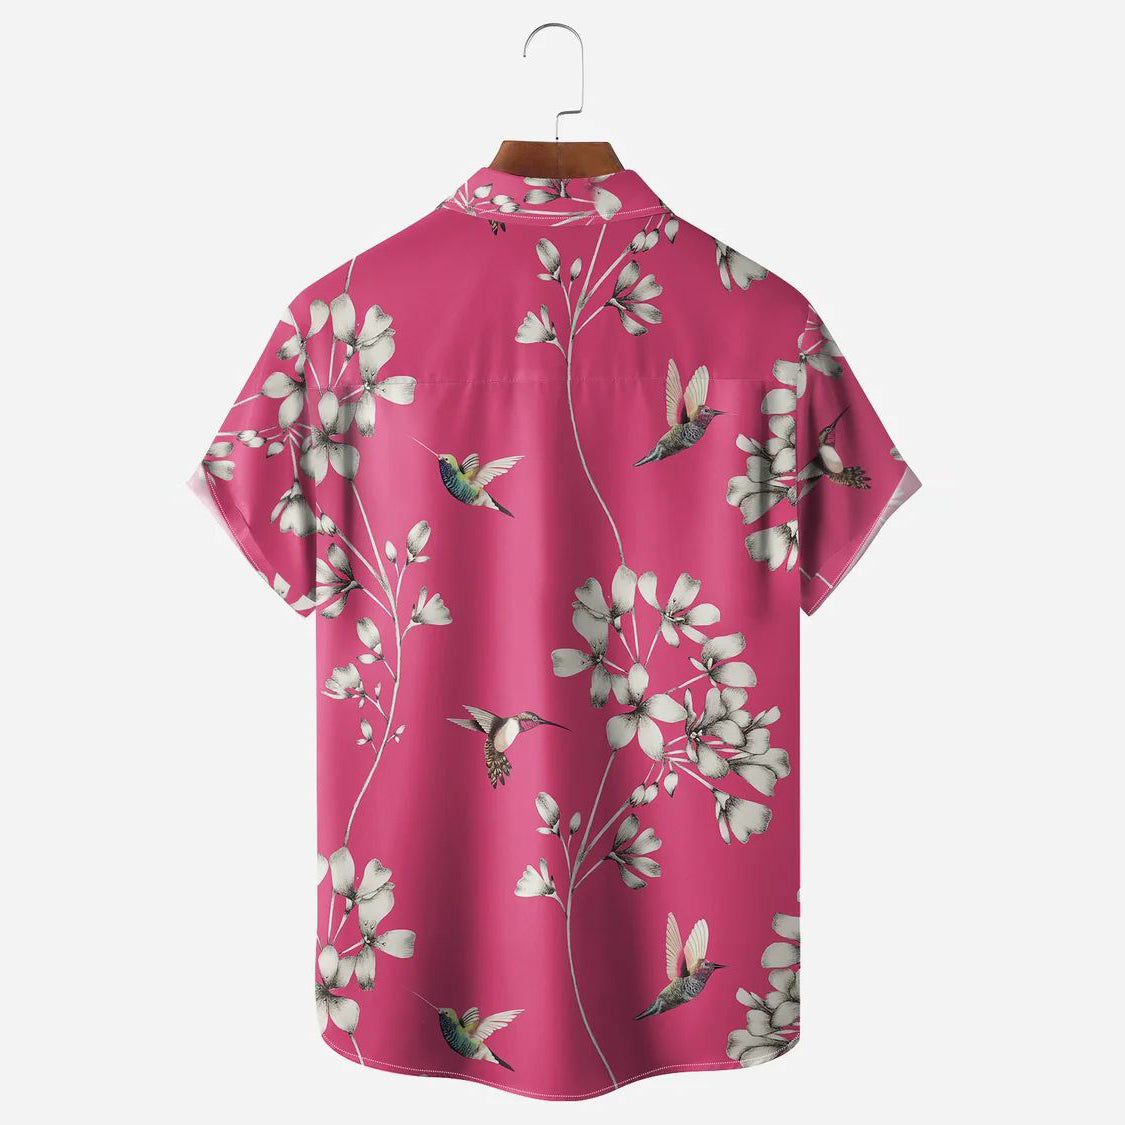 Artistic floral fashion short-sleeved shirt